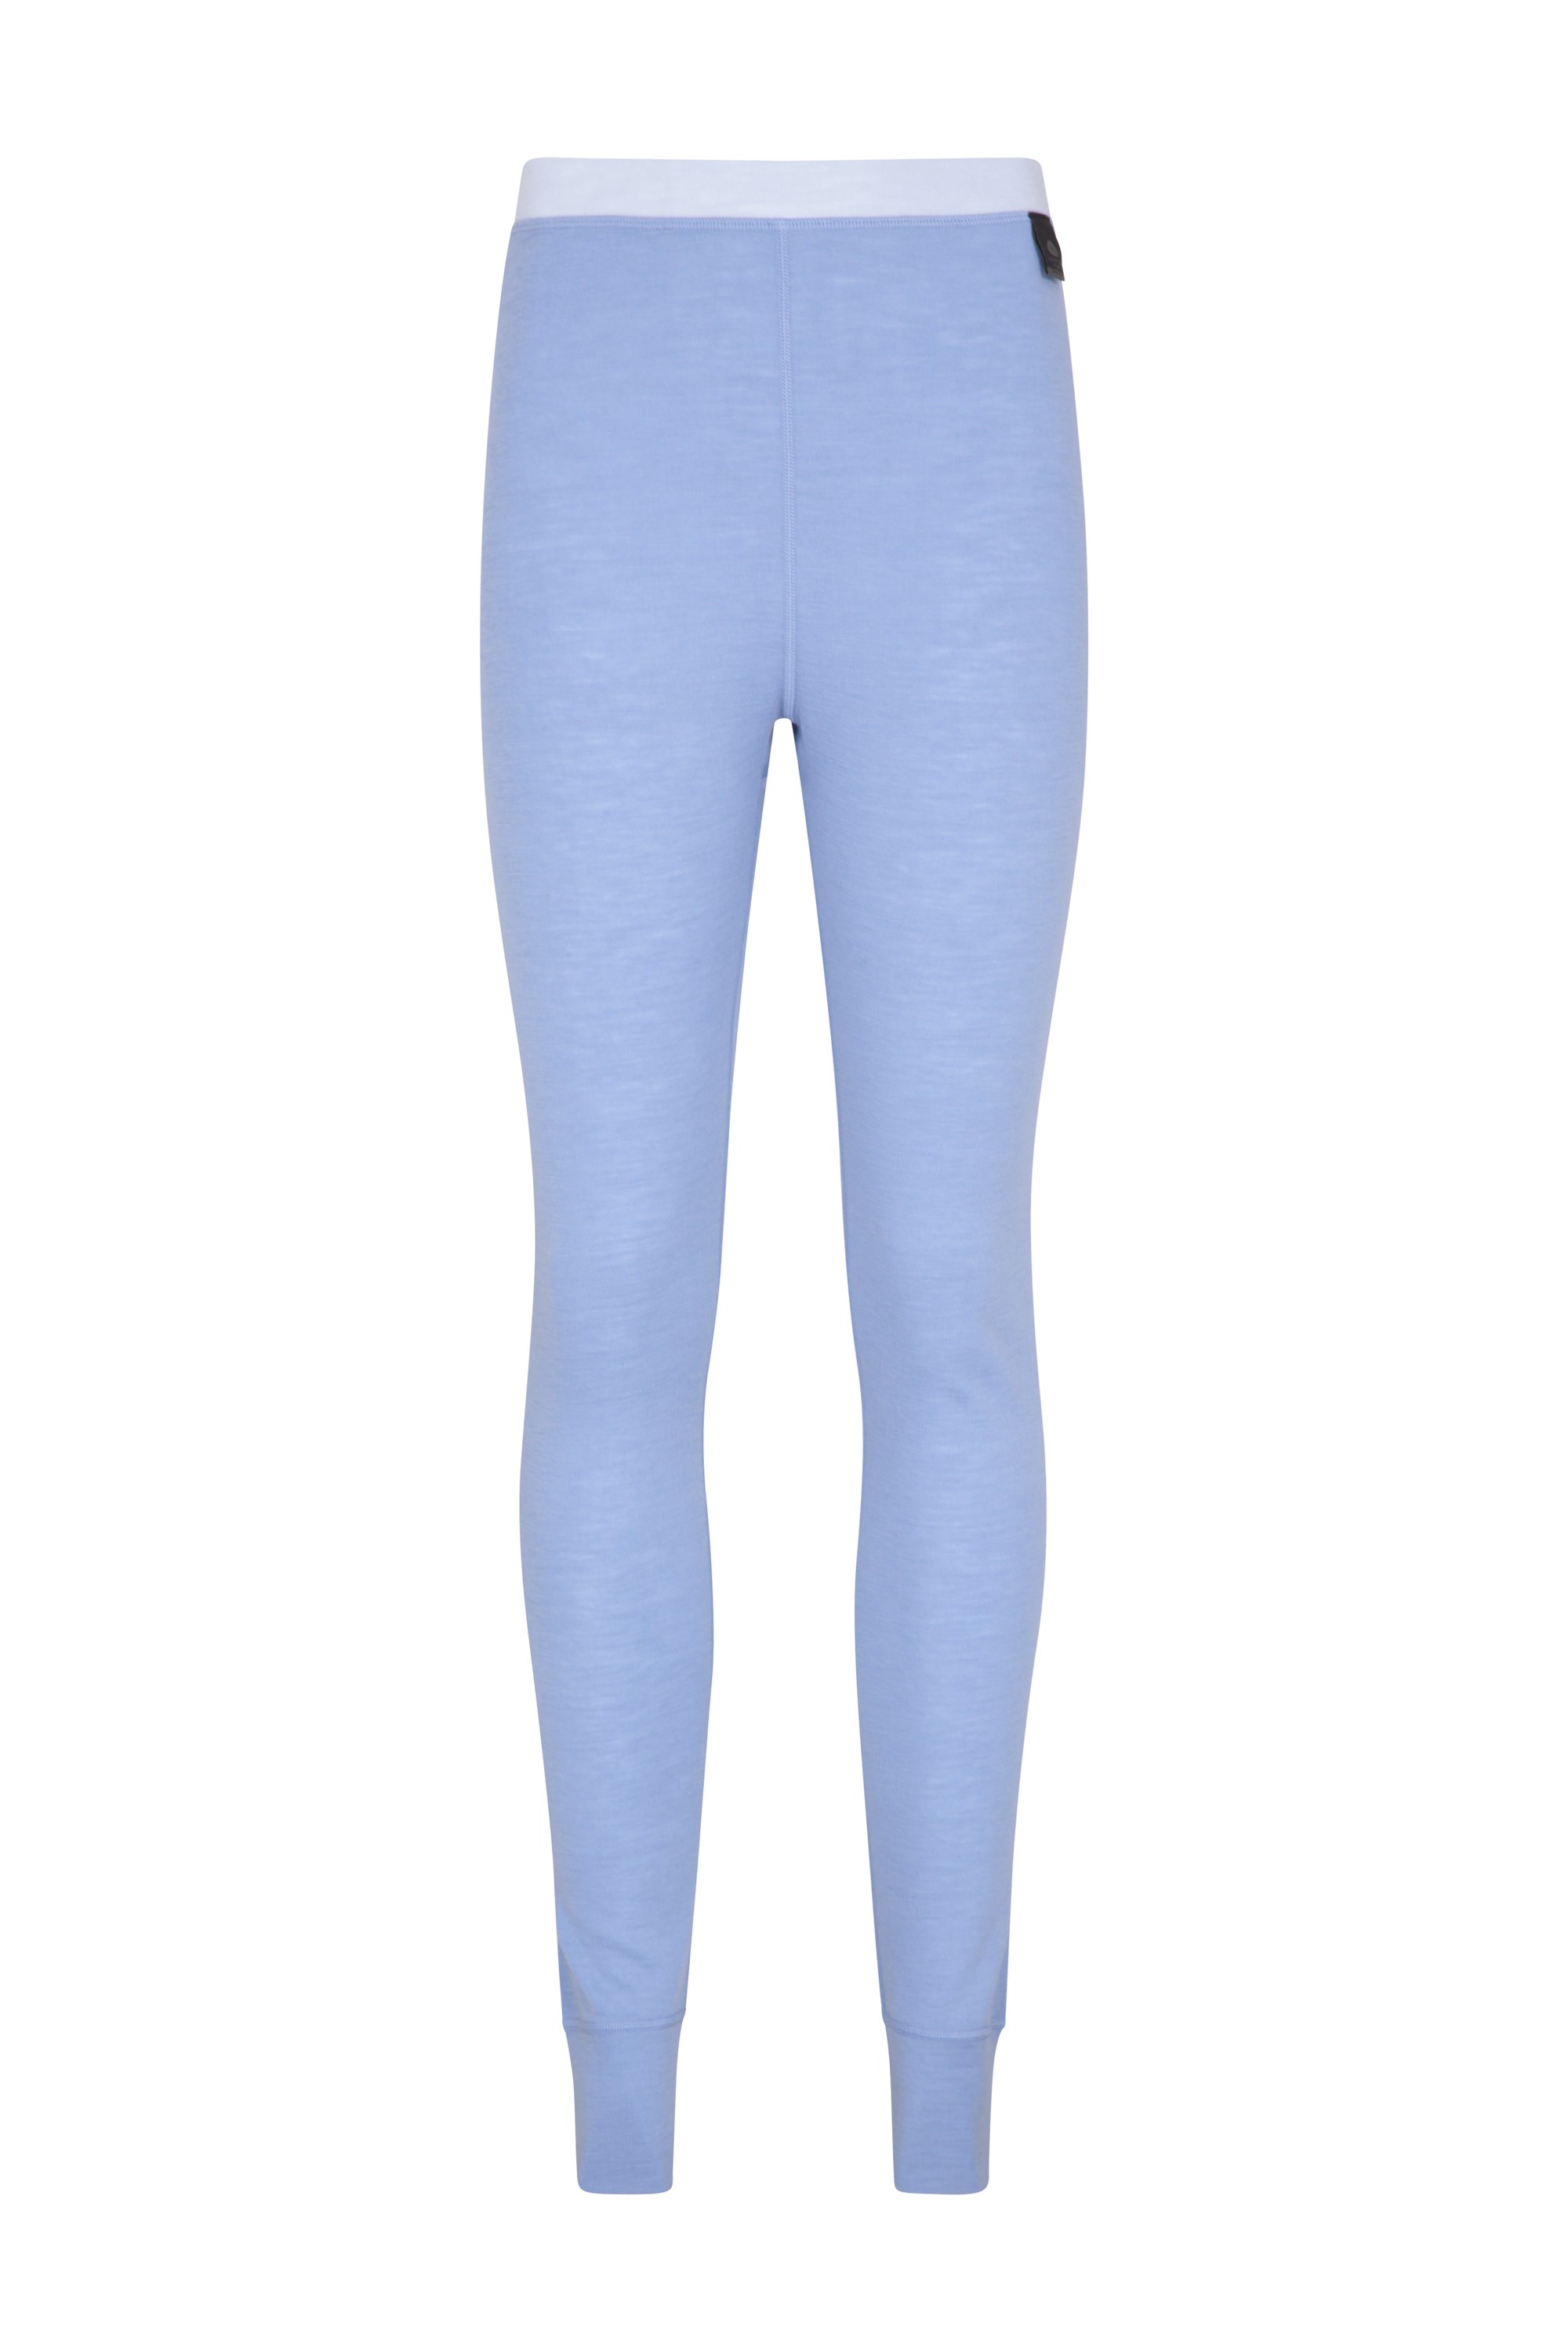 Merino Womens Pants - Blue